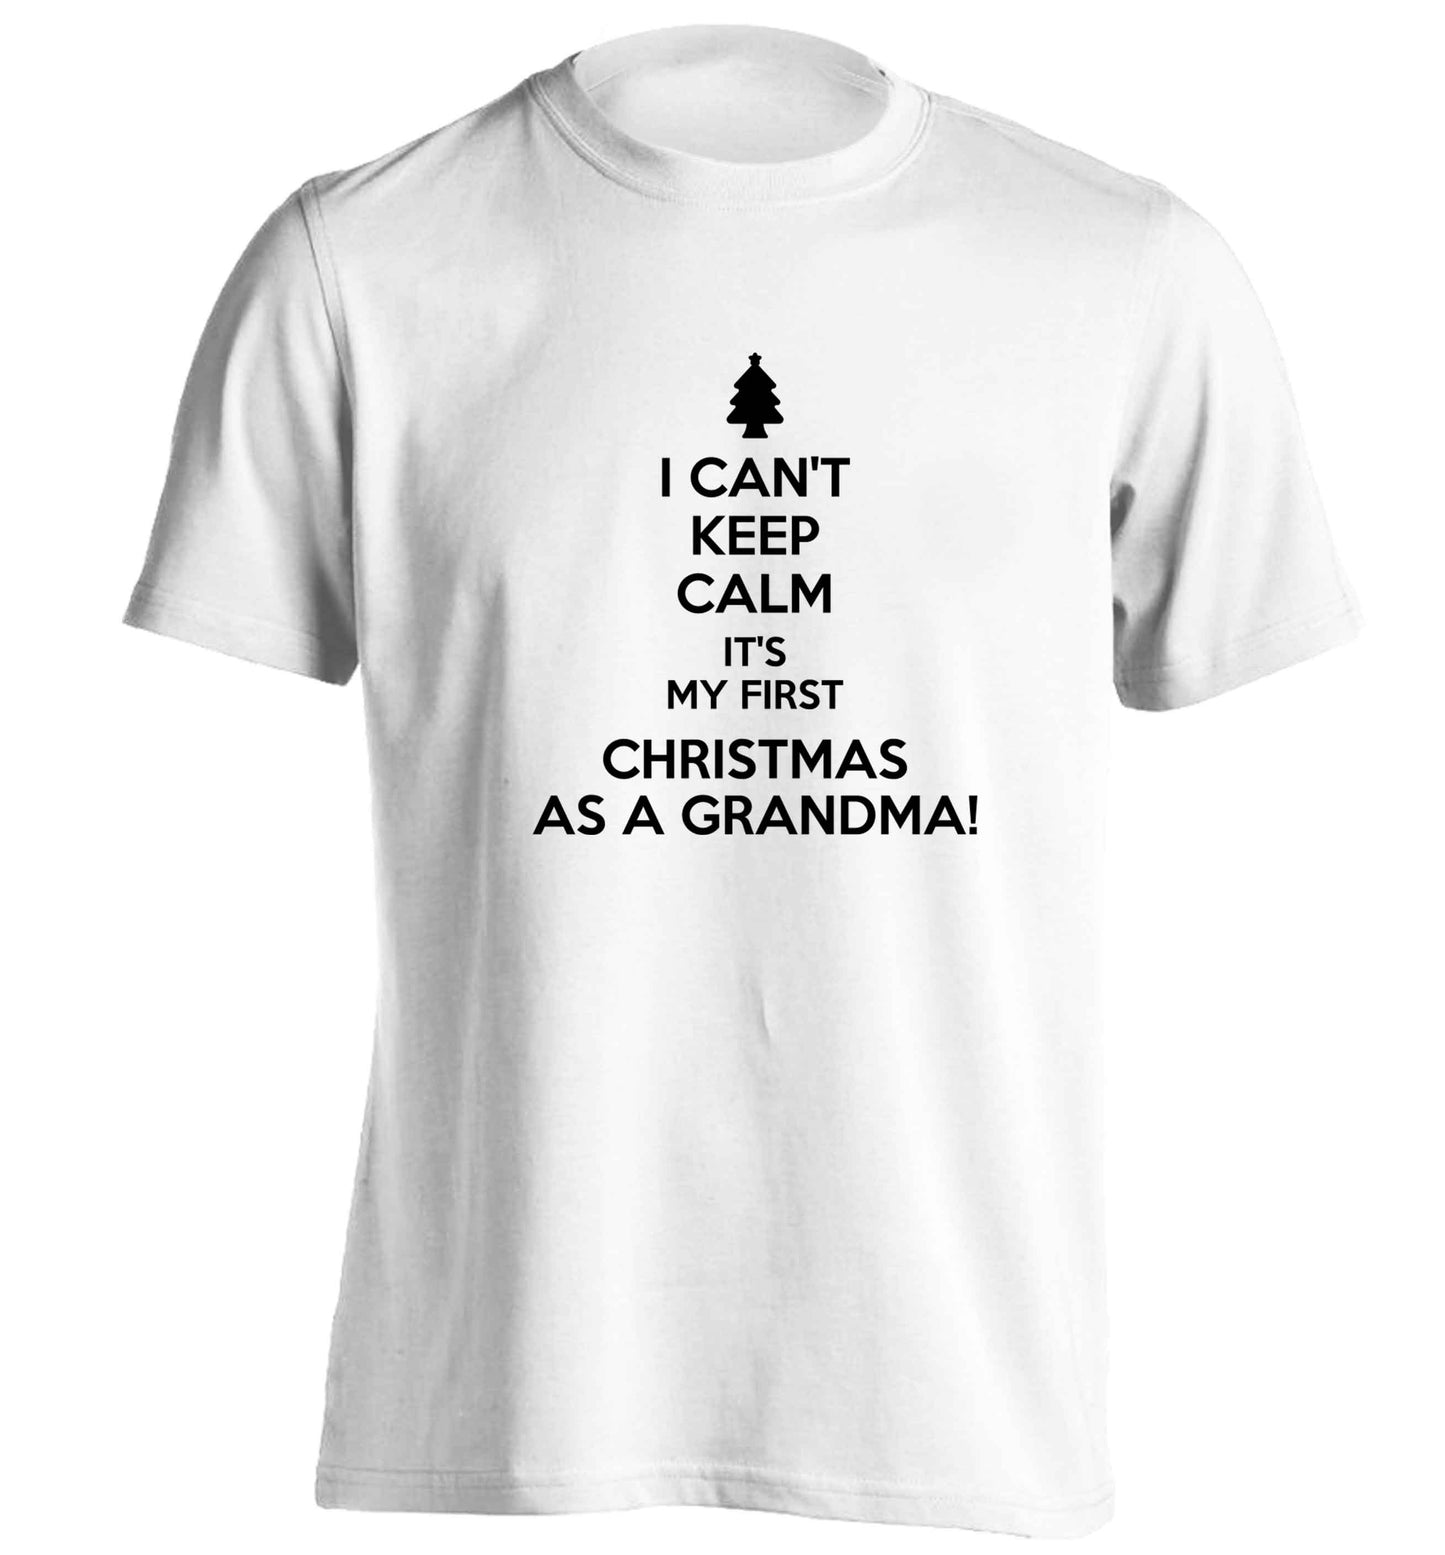 I can't keep calm it's my first Christmas as a grandma! adults unisex white Tshirt 2XL